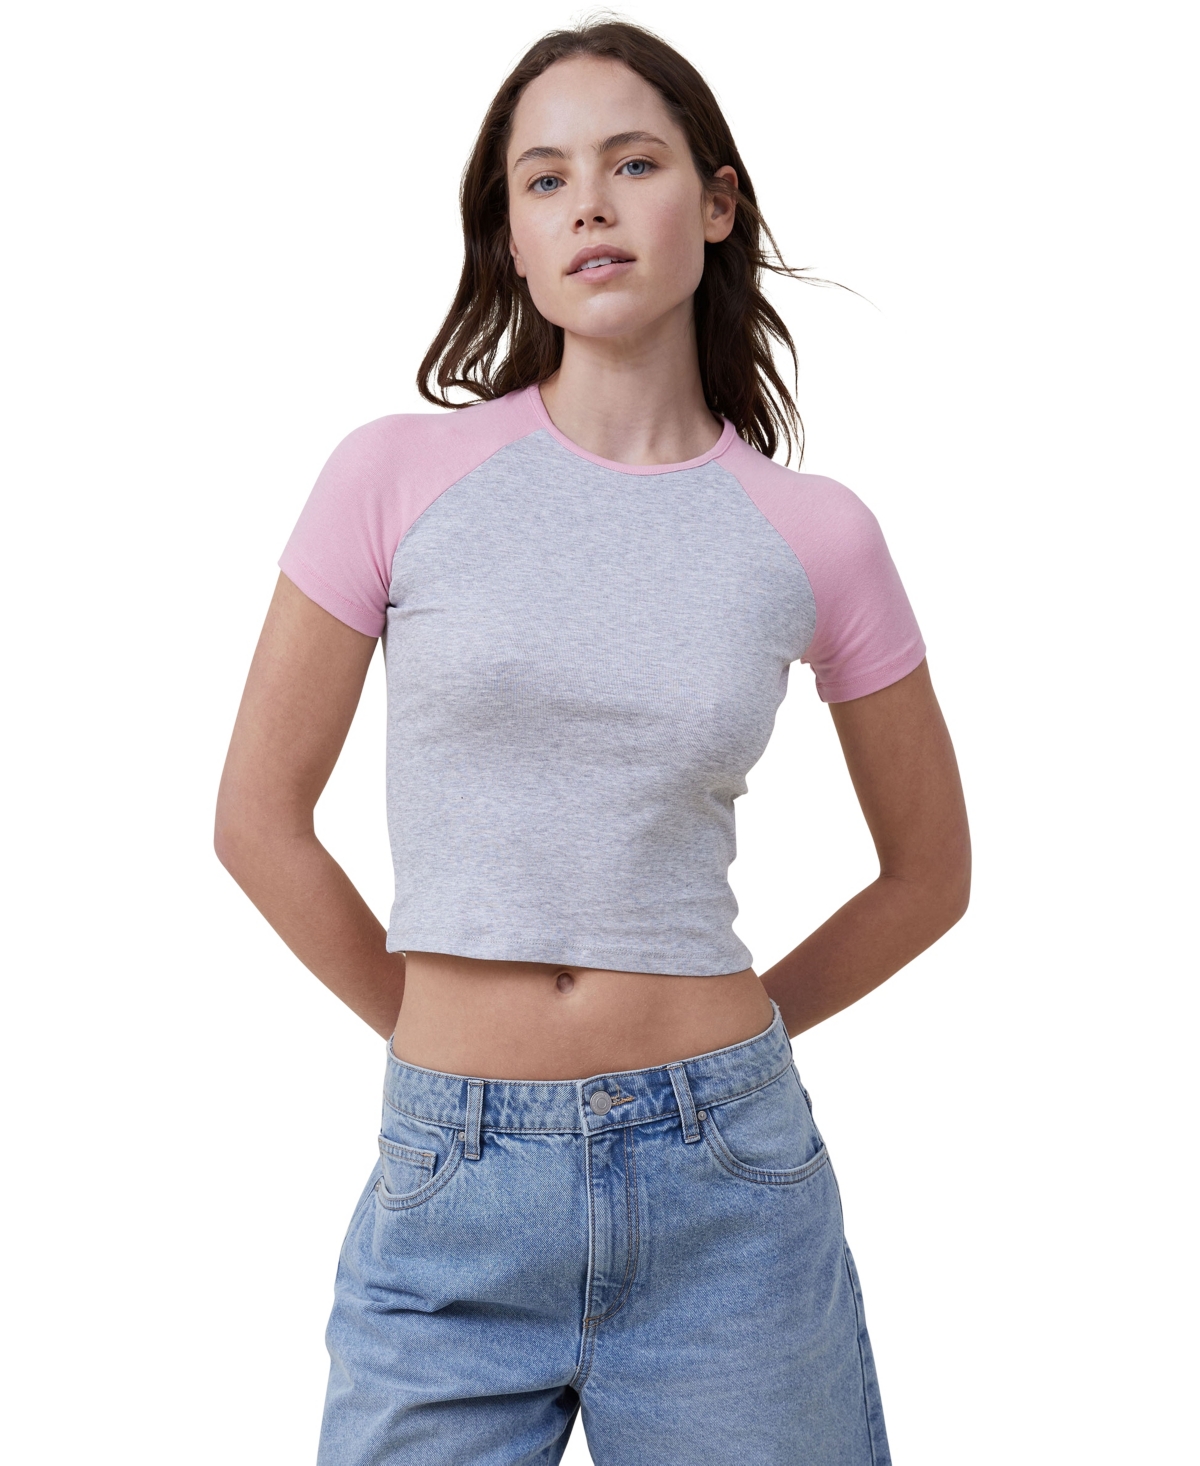 Cotton On Women's Jesse Raglan Short Sleeve T-shirt